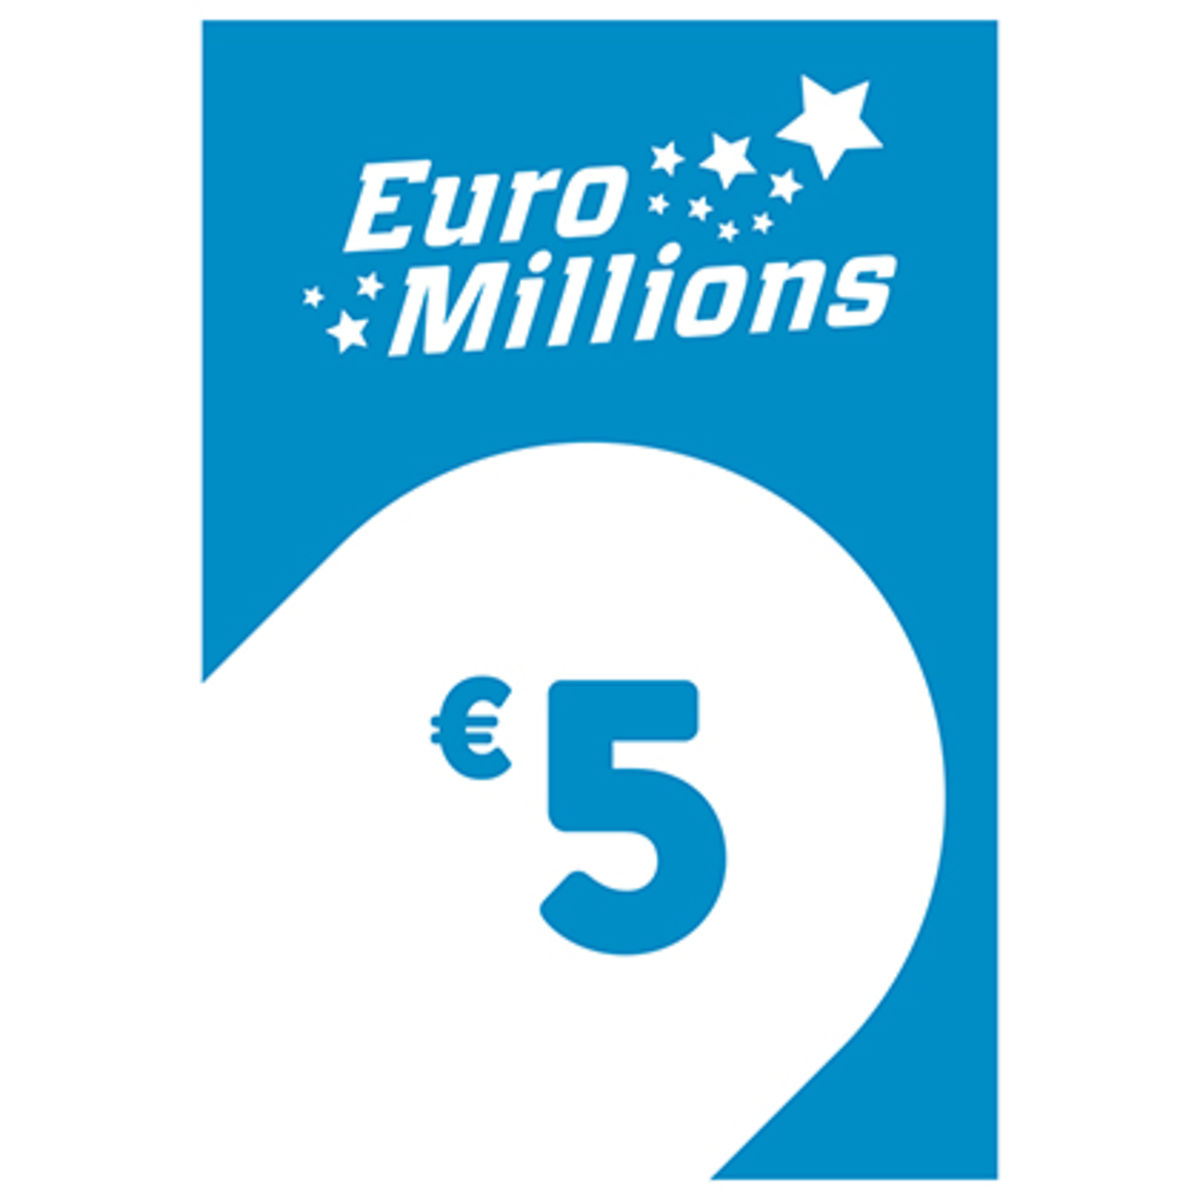 Euromillions 5 €